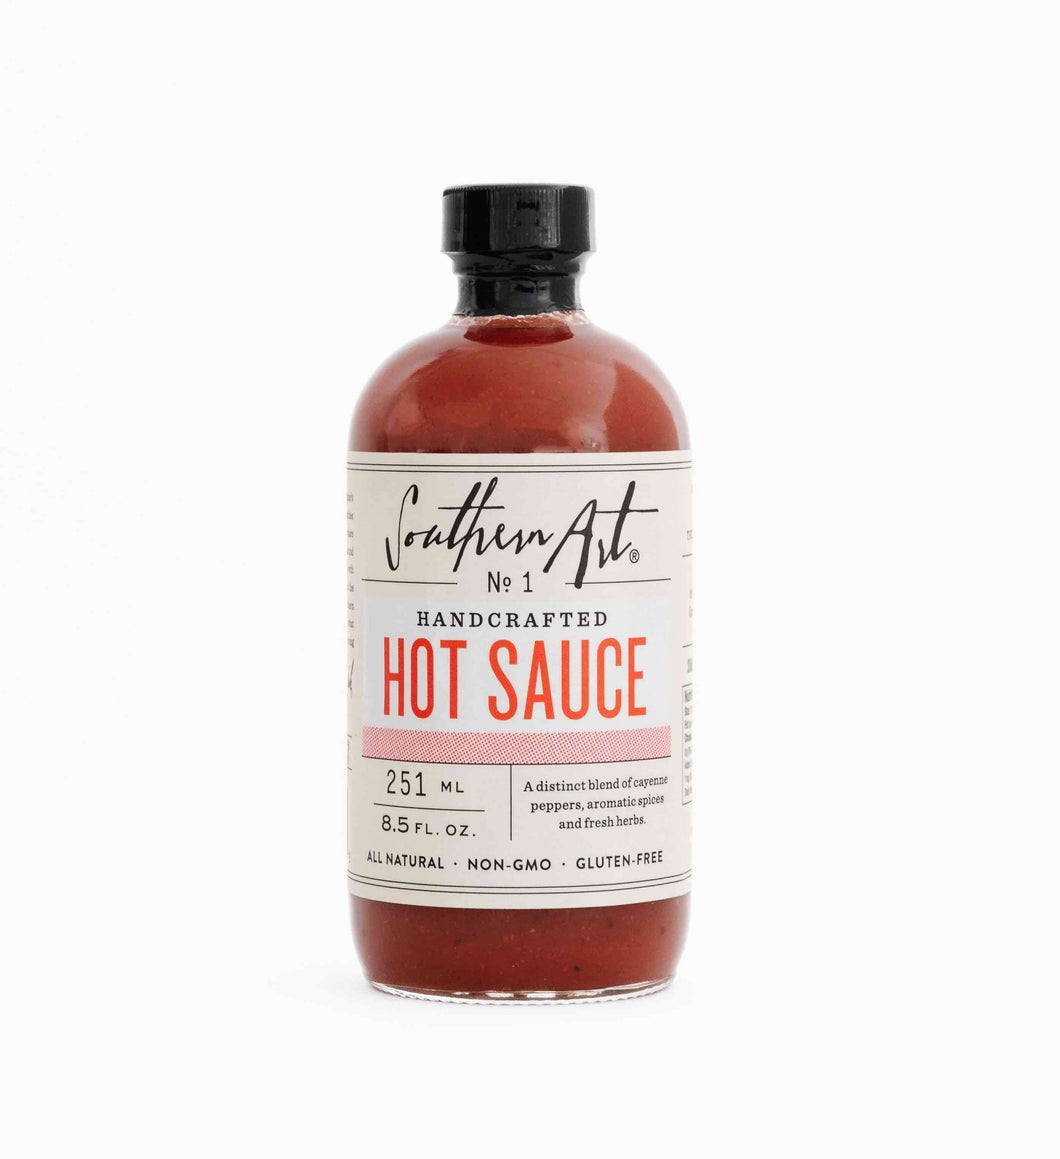 Southern Art Co. Original Southern Hot Sauce